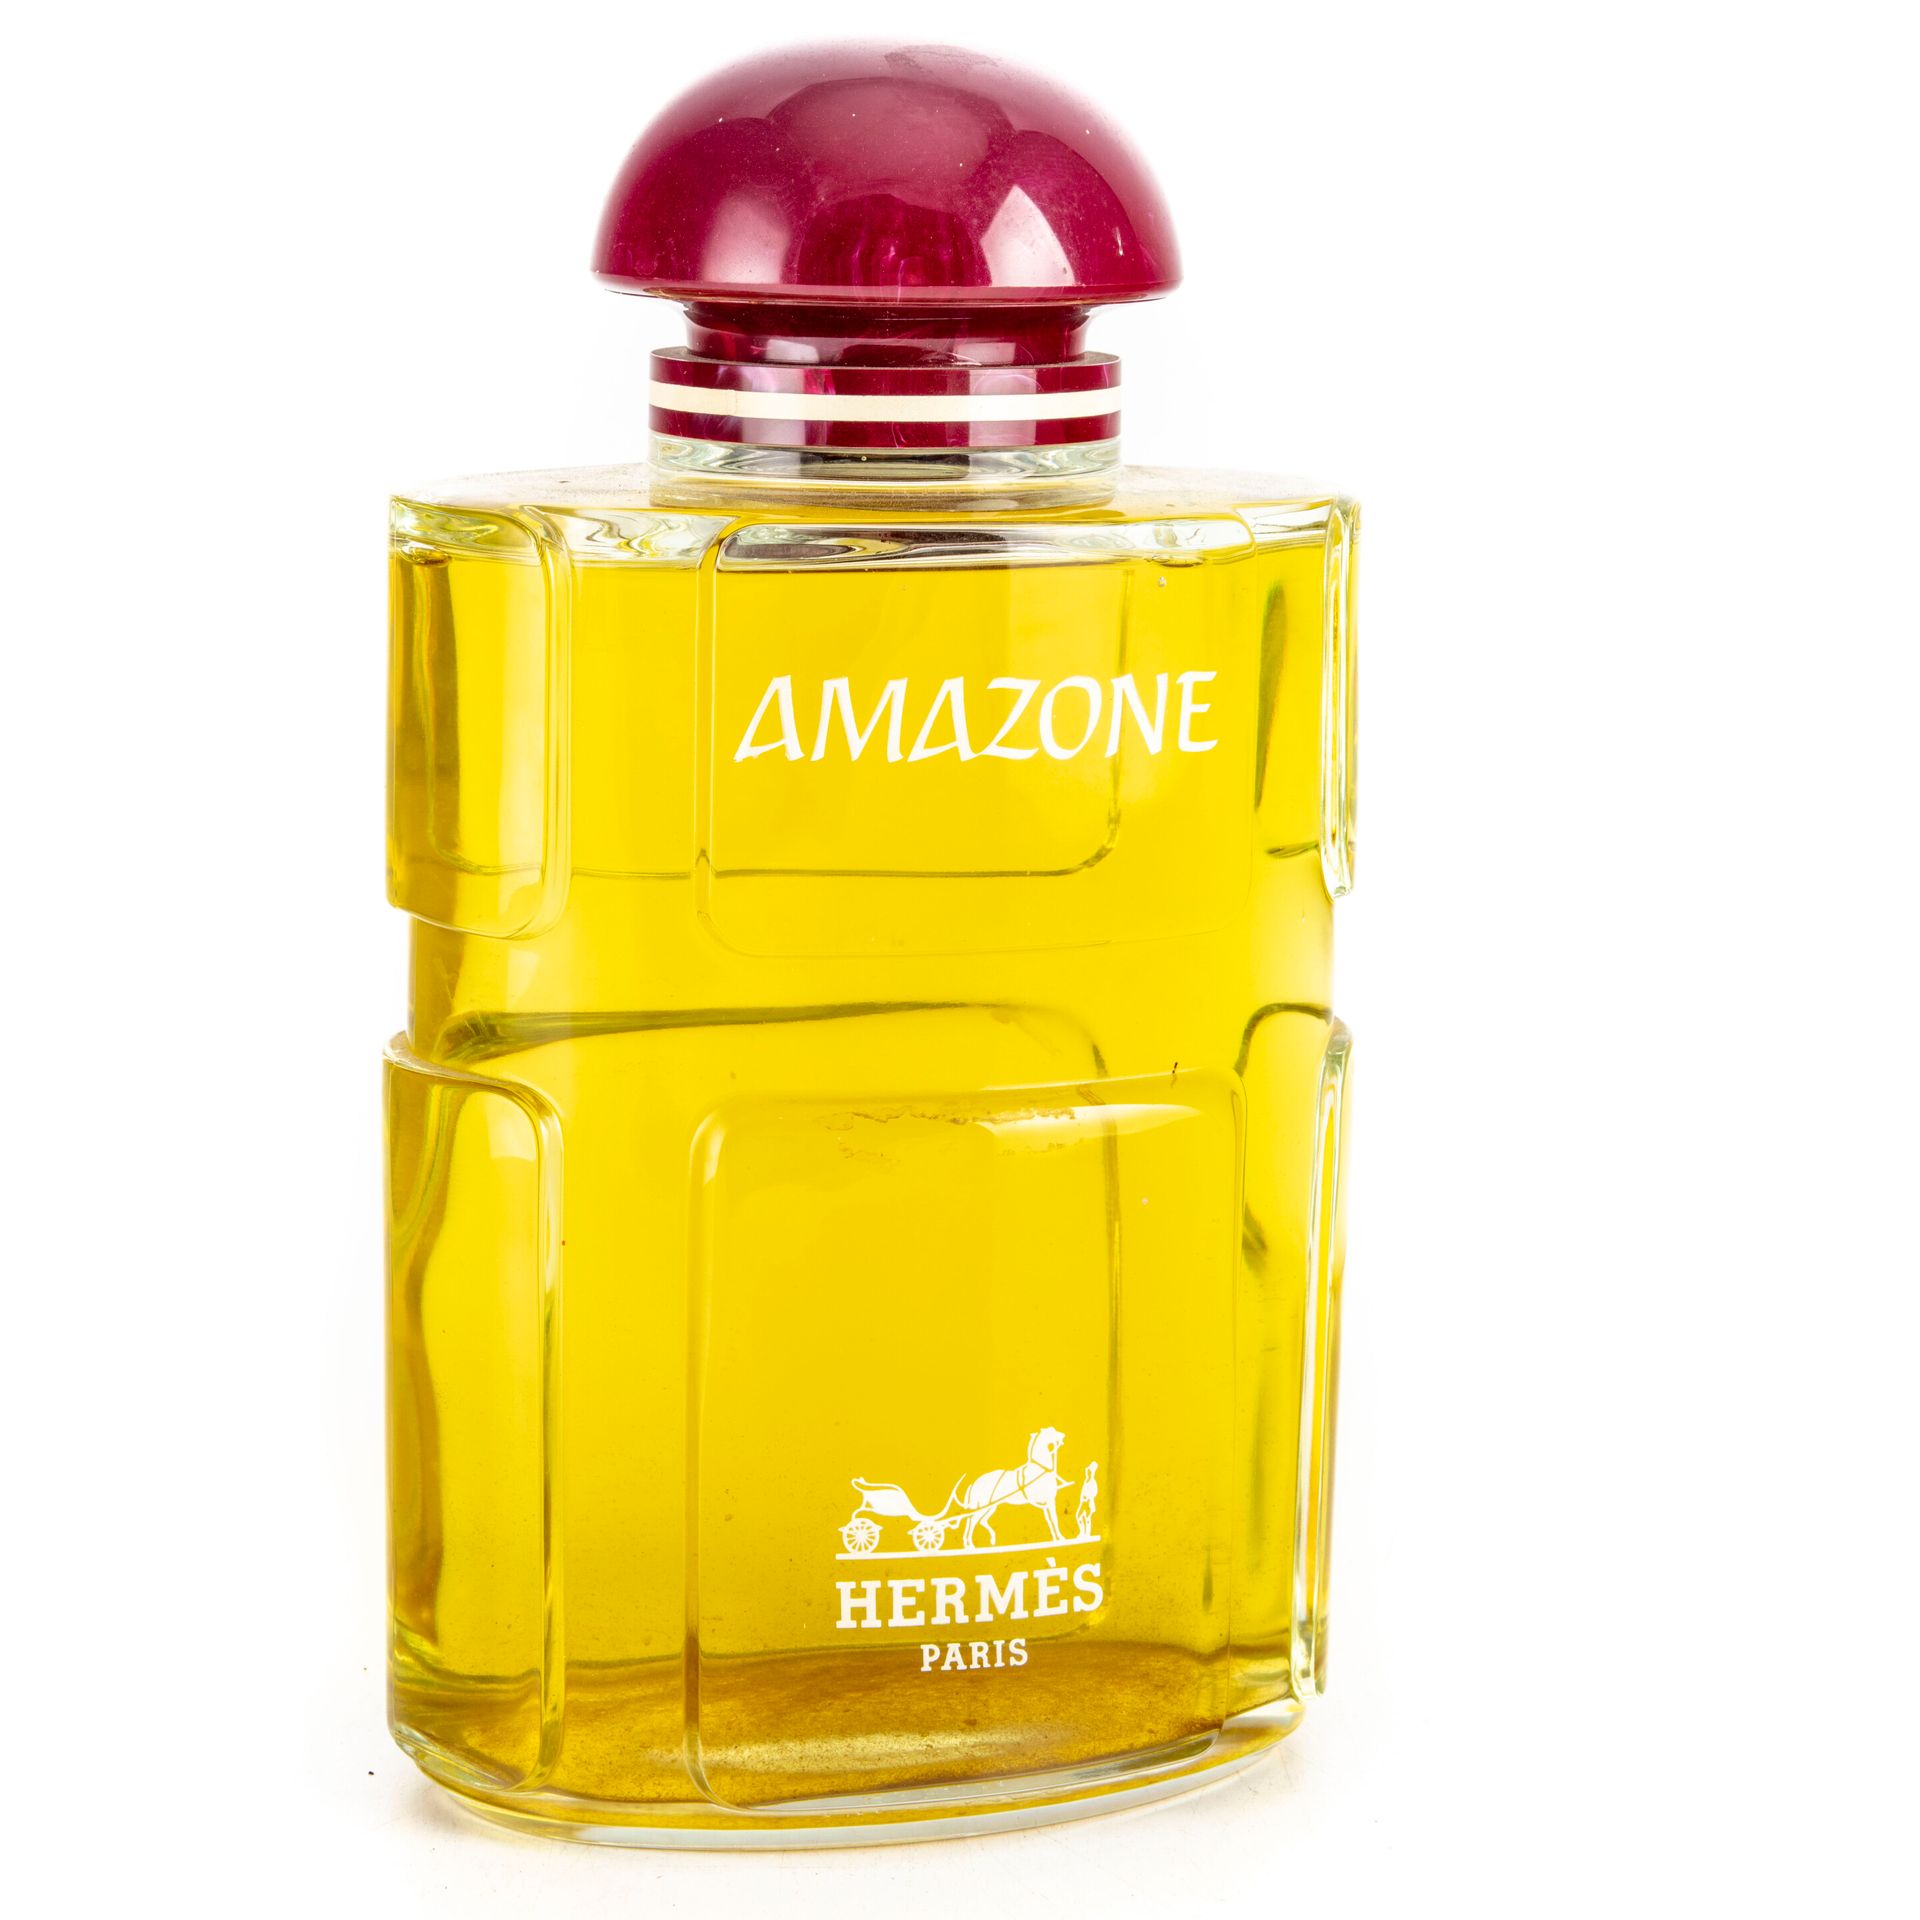 Null HERMES - Paris 

Glass bottle, perfume "AMAZONE", dummy

H. 34 cm